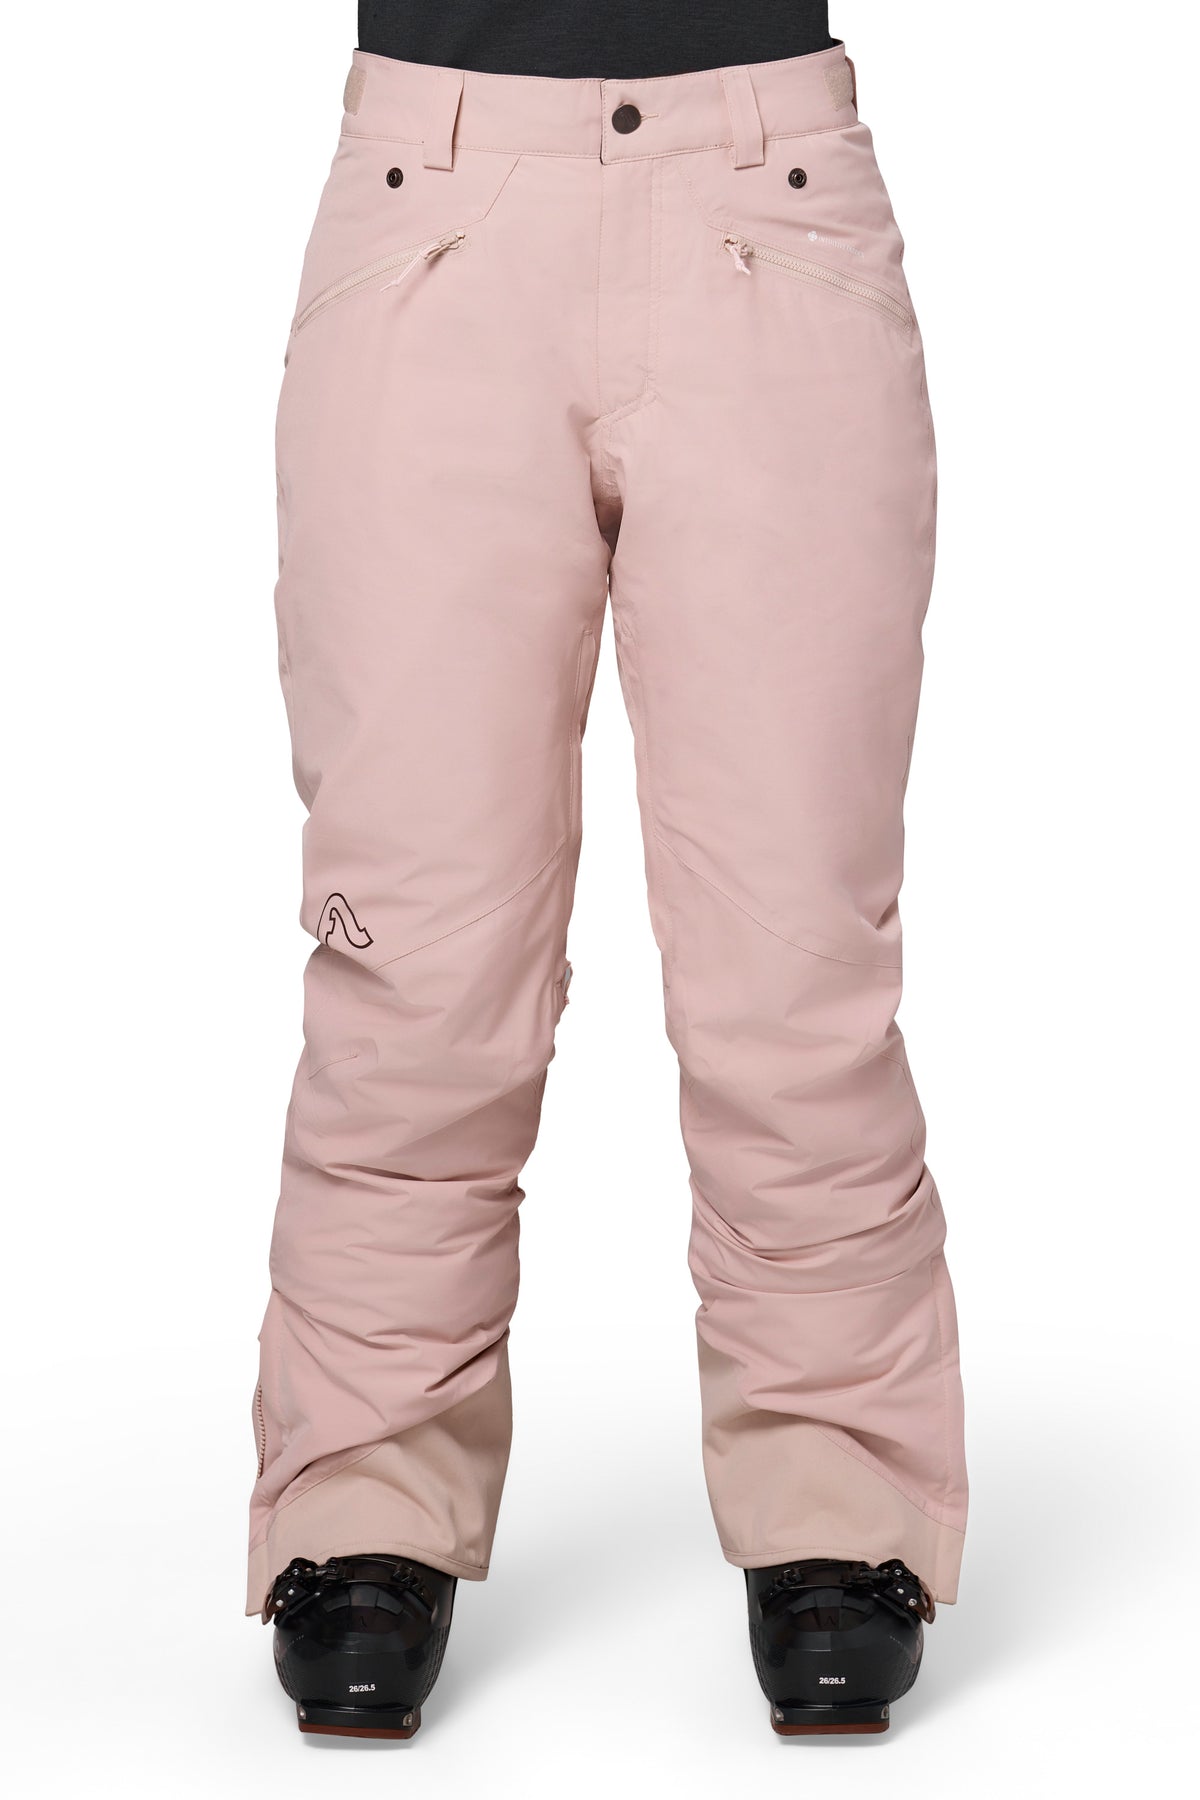 Daisy Pant - Women's Insulated Ski Pants